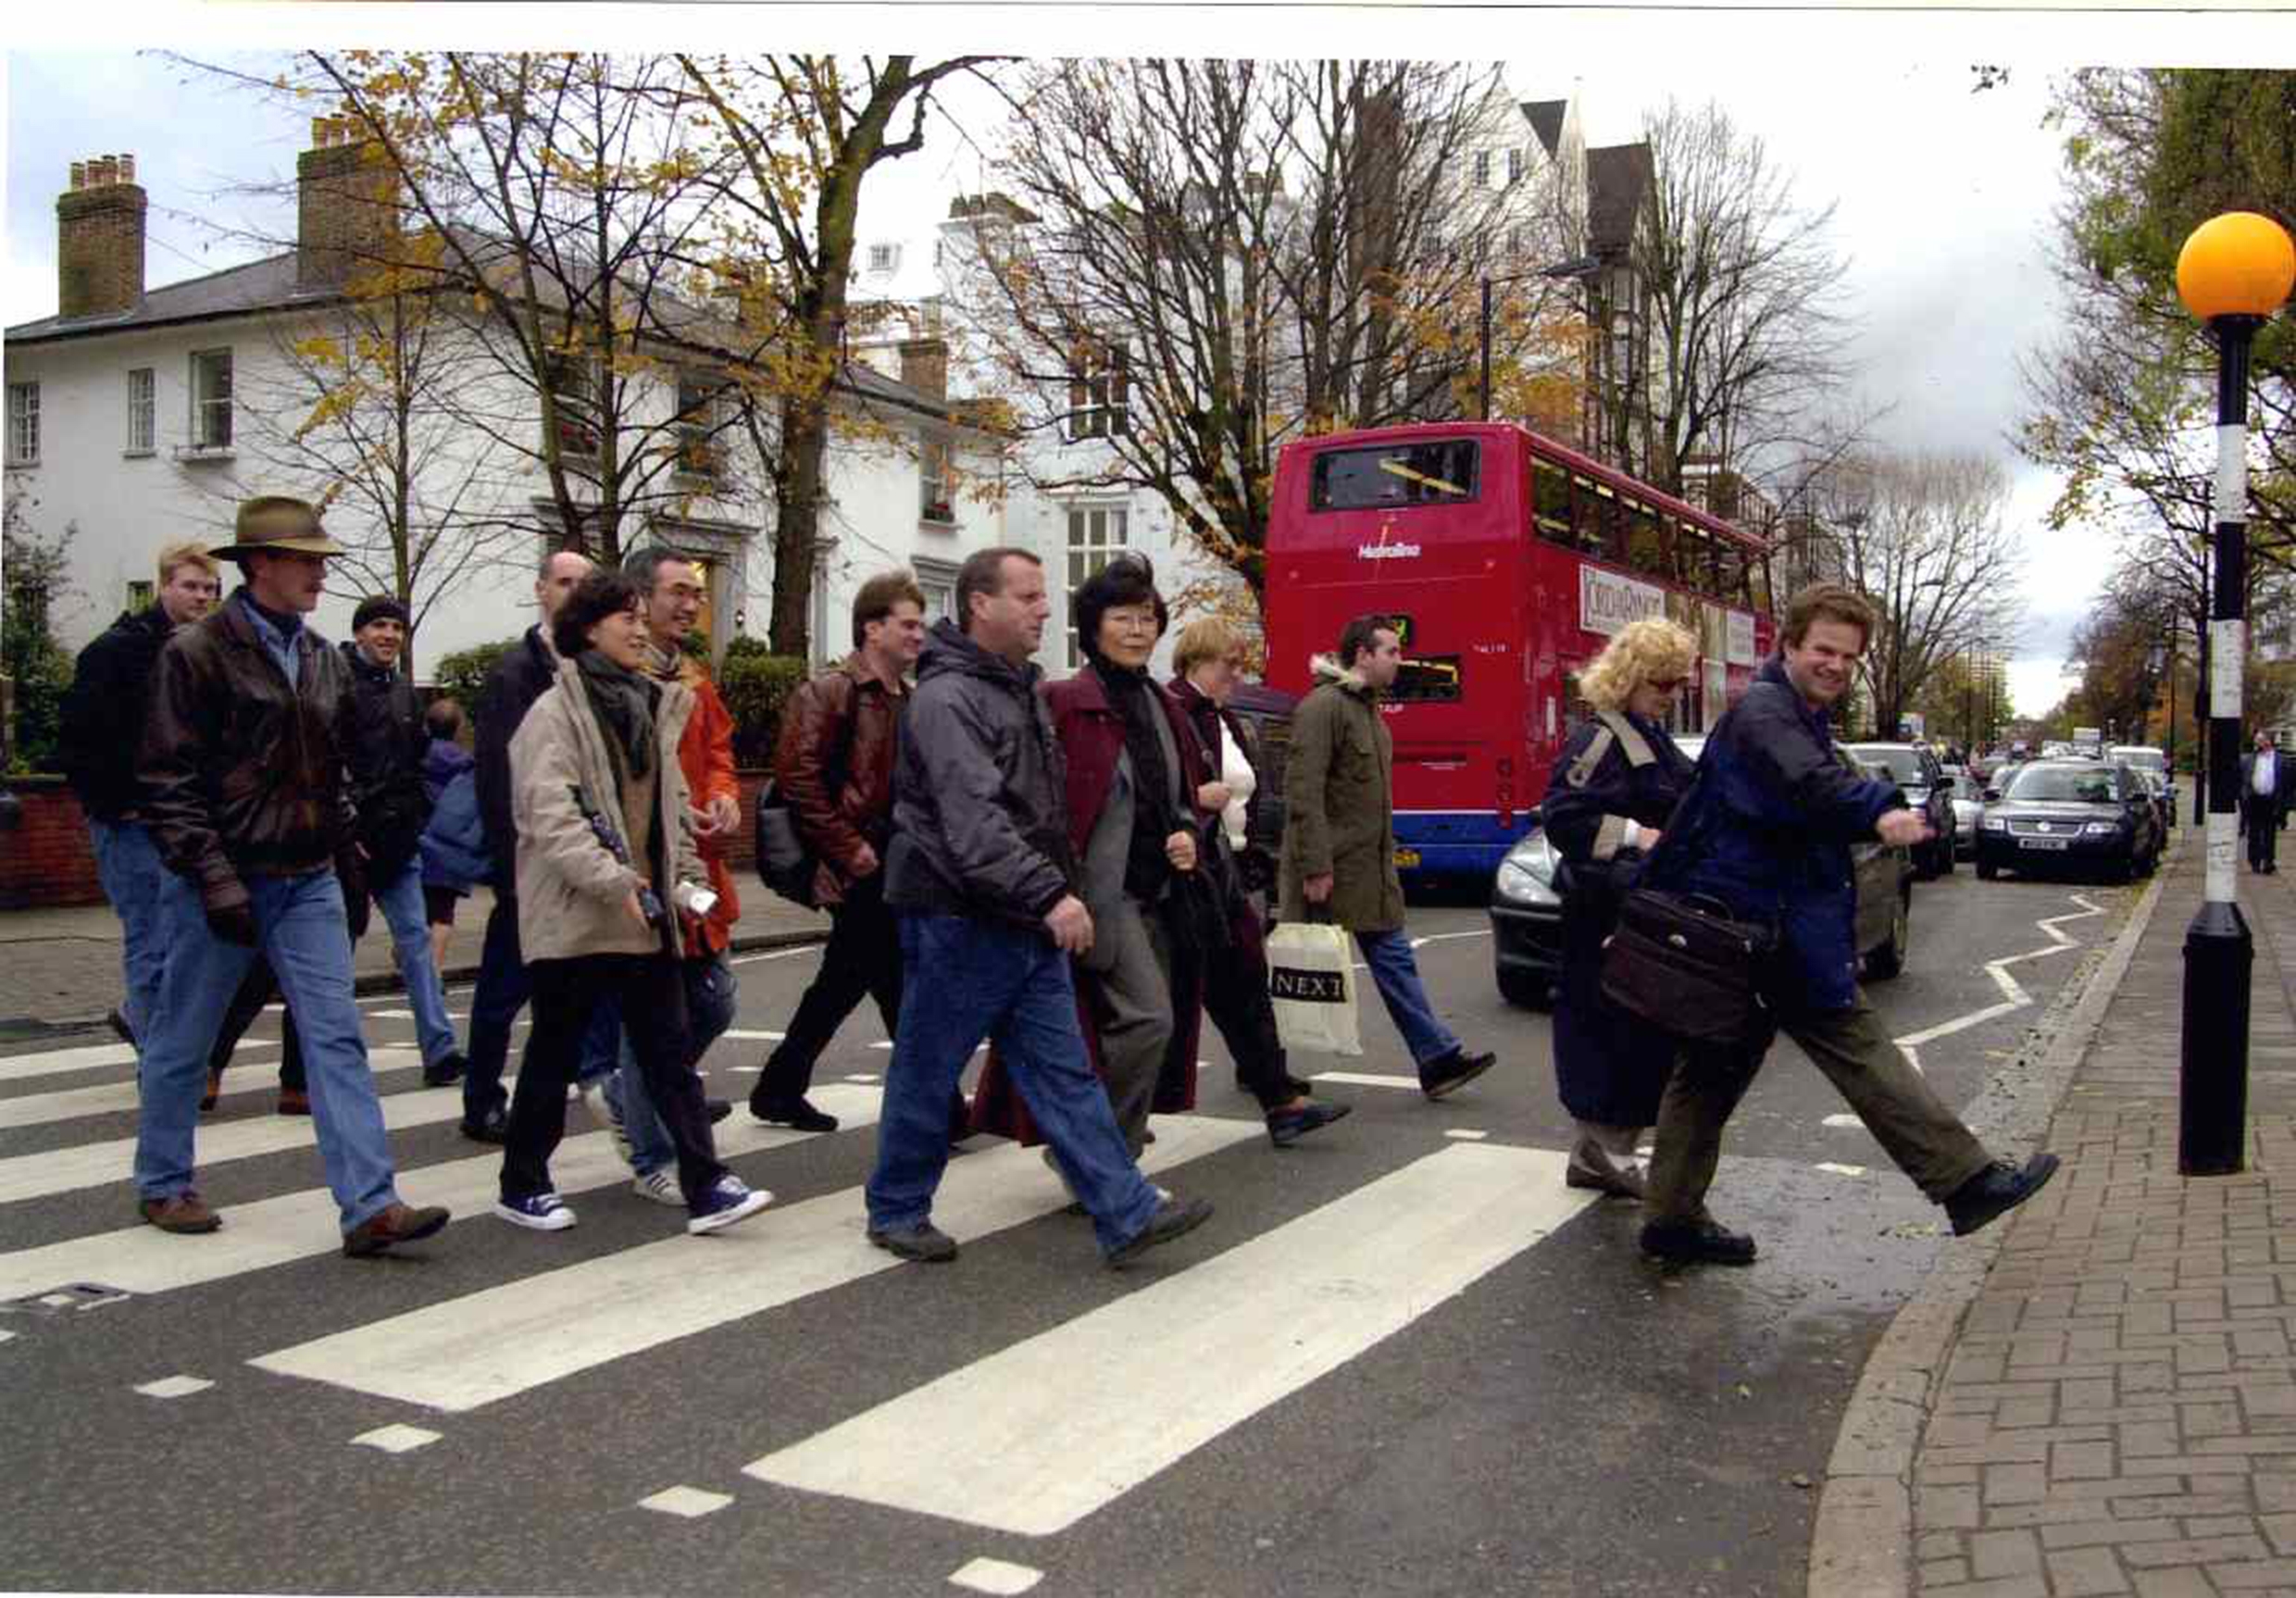 Beatles London Walk, Beatles London tour, Beatles Abbey Road,